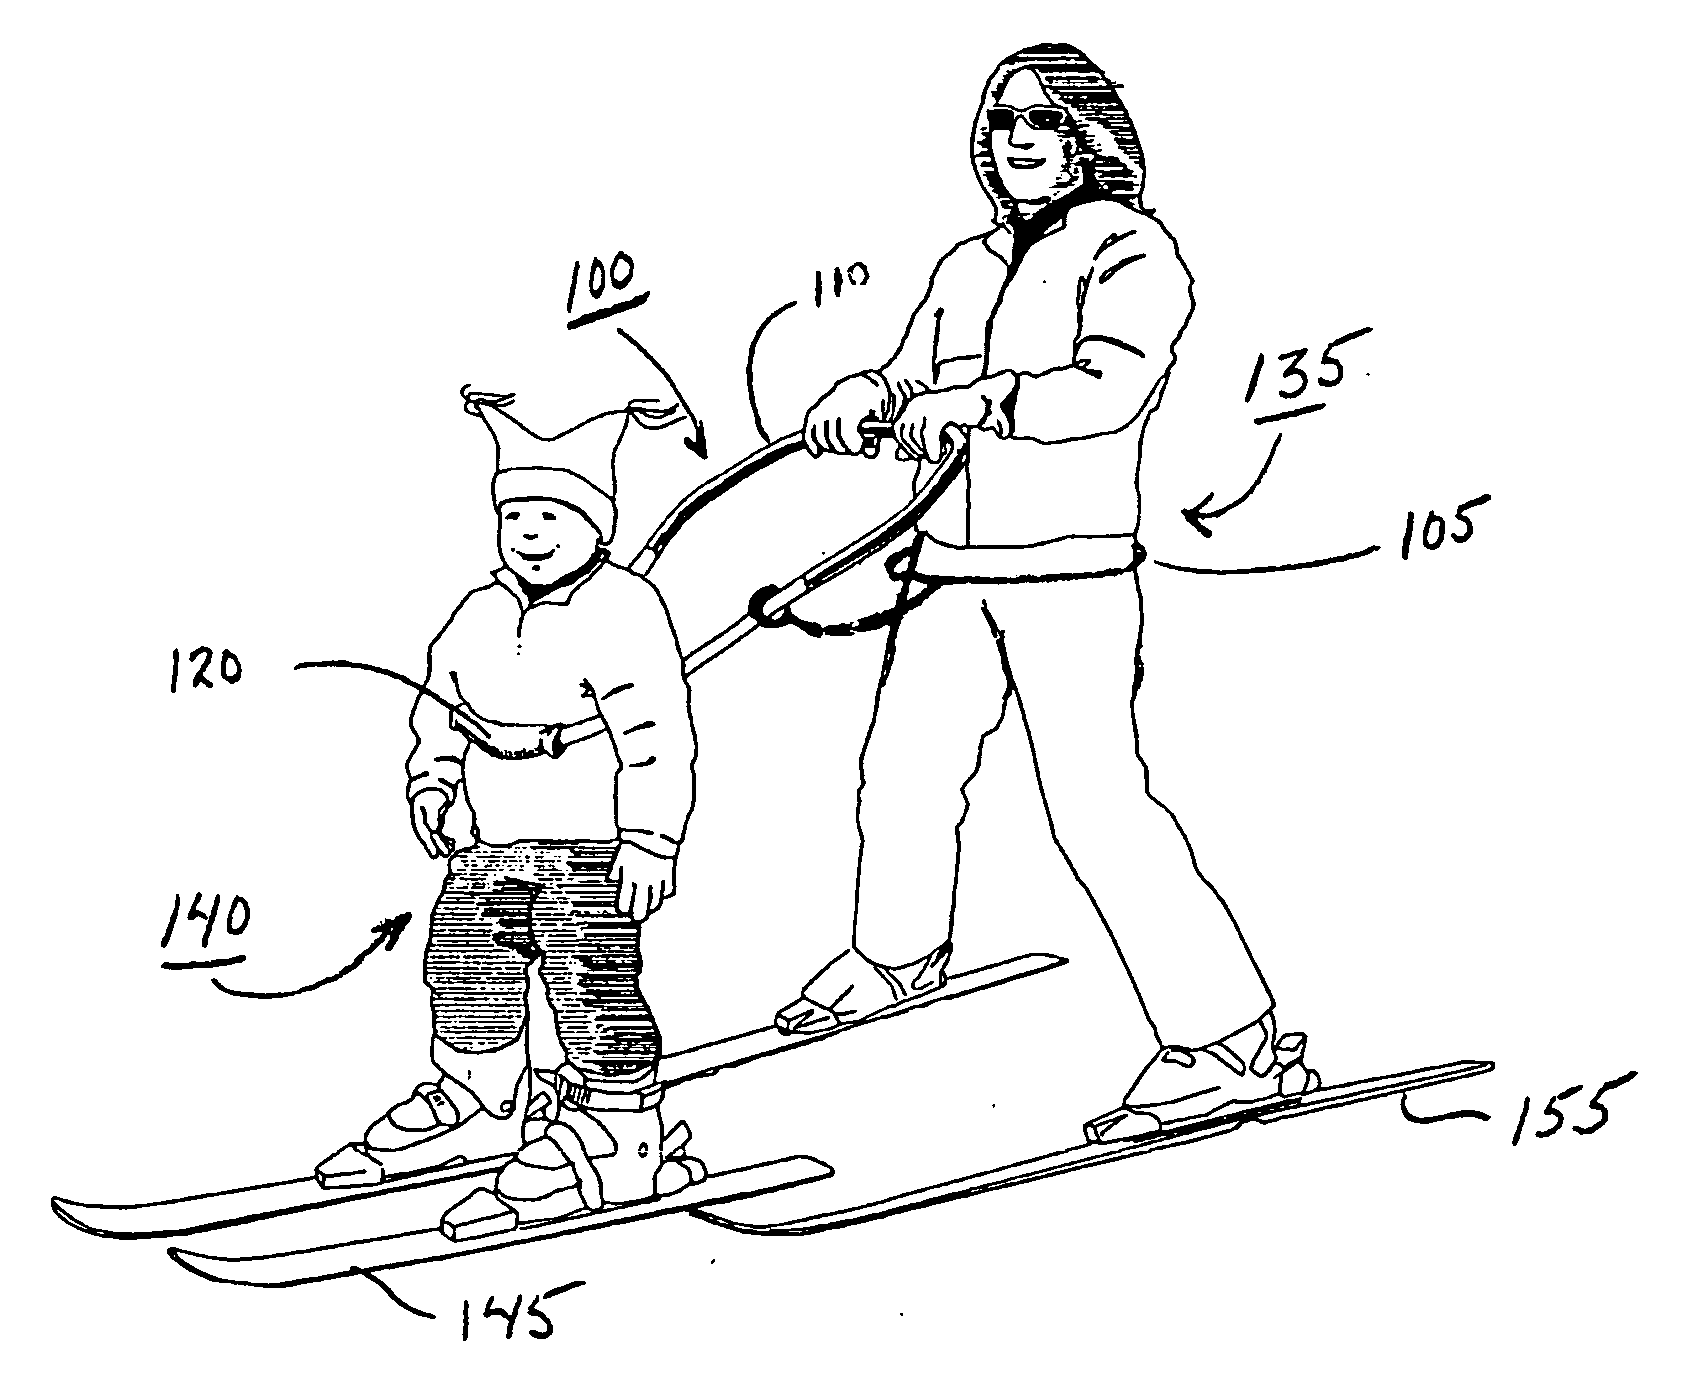 Ski training apparatus and method